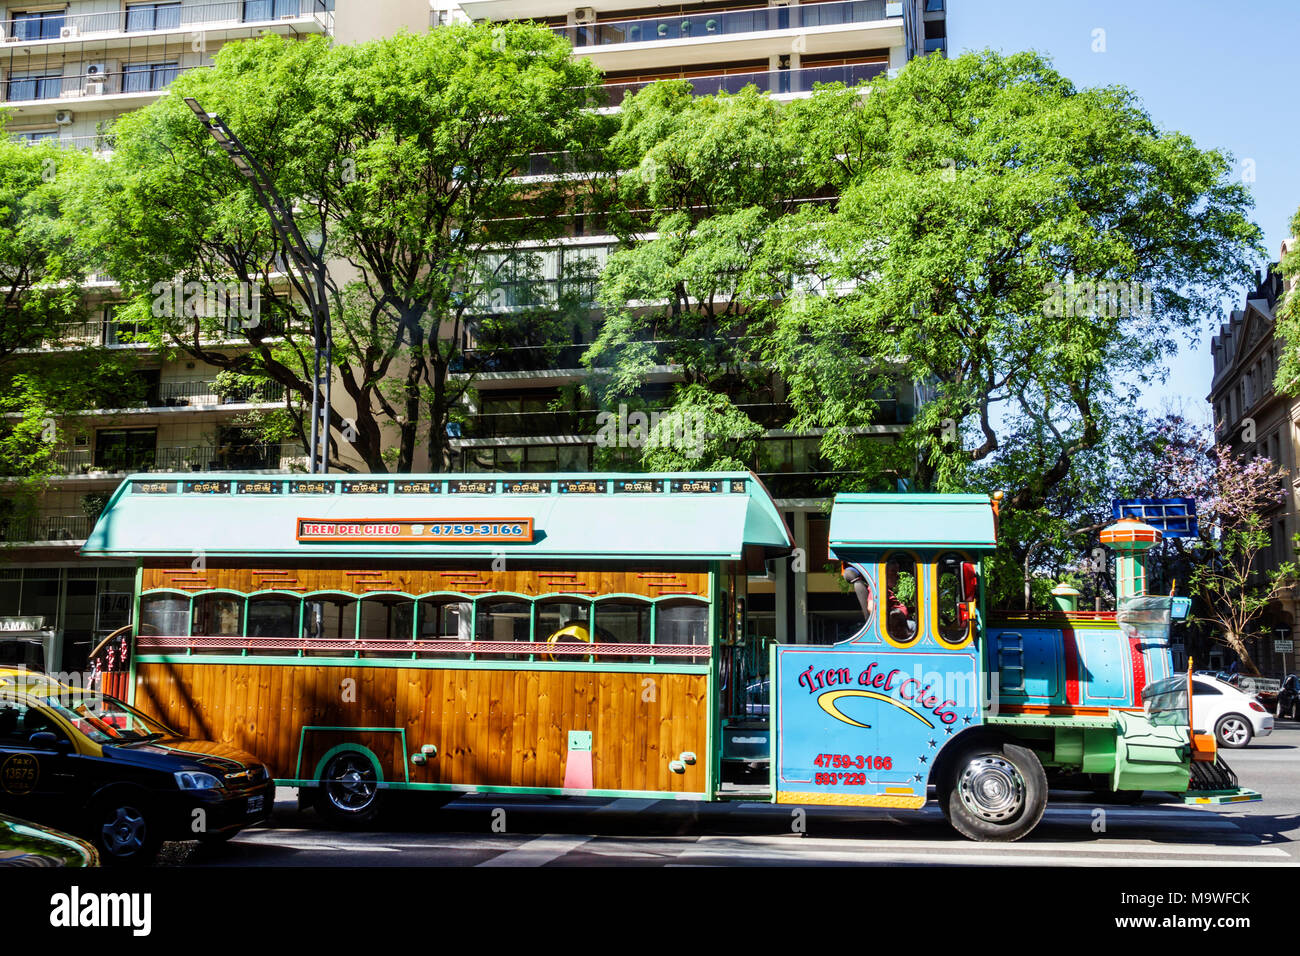 Buenos Aires Argentina,Palermo,Avenida del Libertador,Tren del Cielo,sightseeing vehicle,Hispanic,ARG171130163 Stock Photo